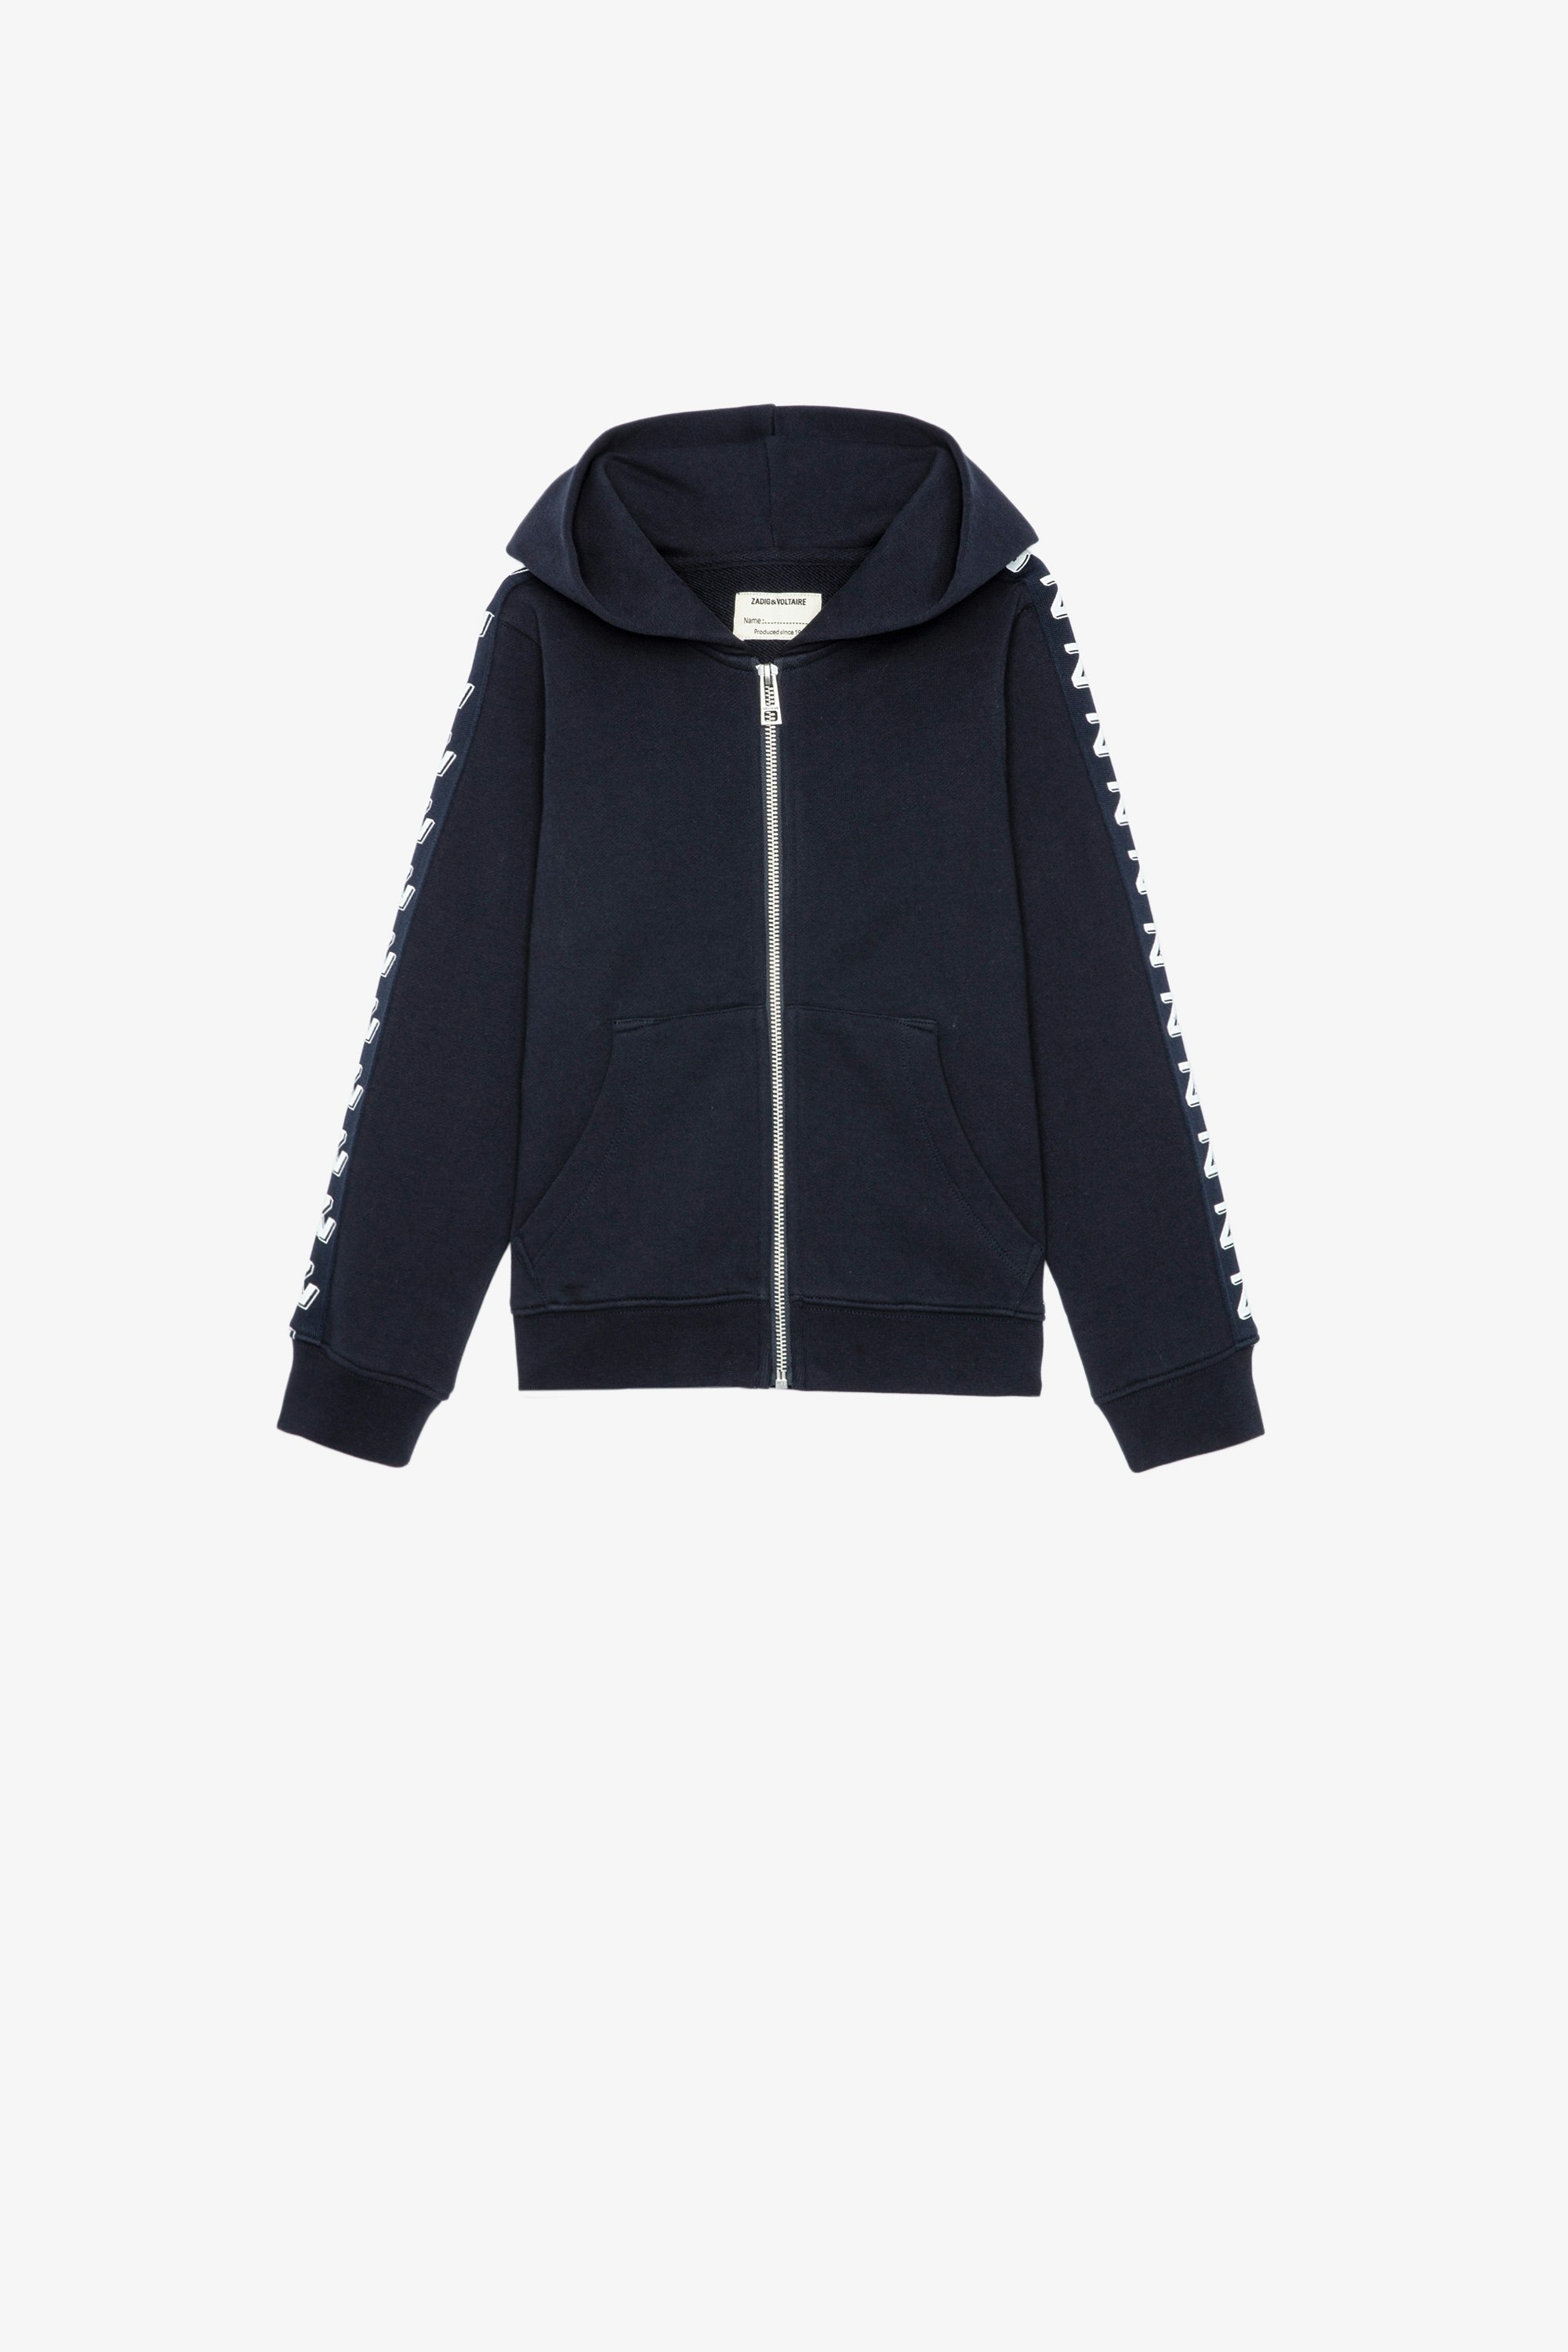 Ghost Kids' Sweatshirt Kids’ zip-up hoodie in navy-blue cotton with printed braid on the sides